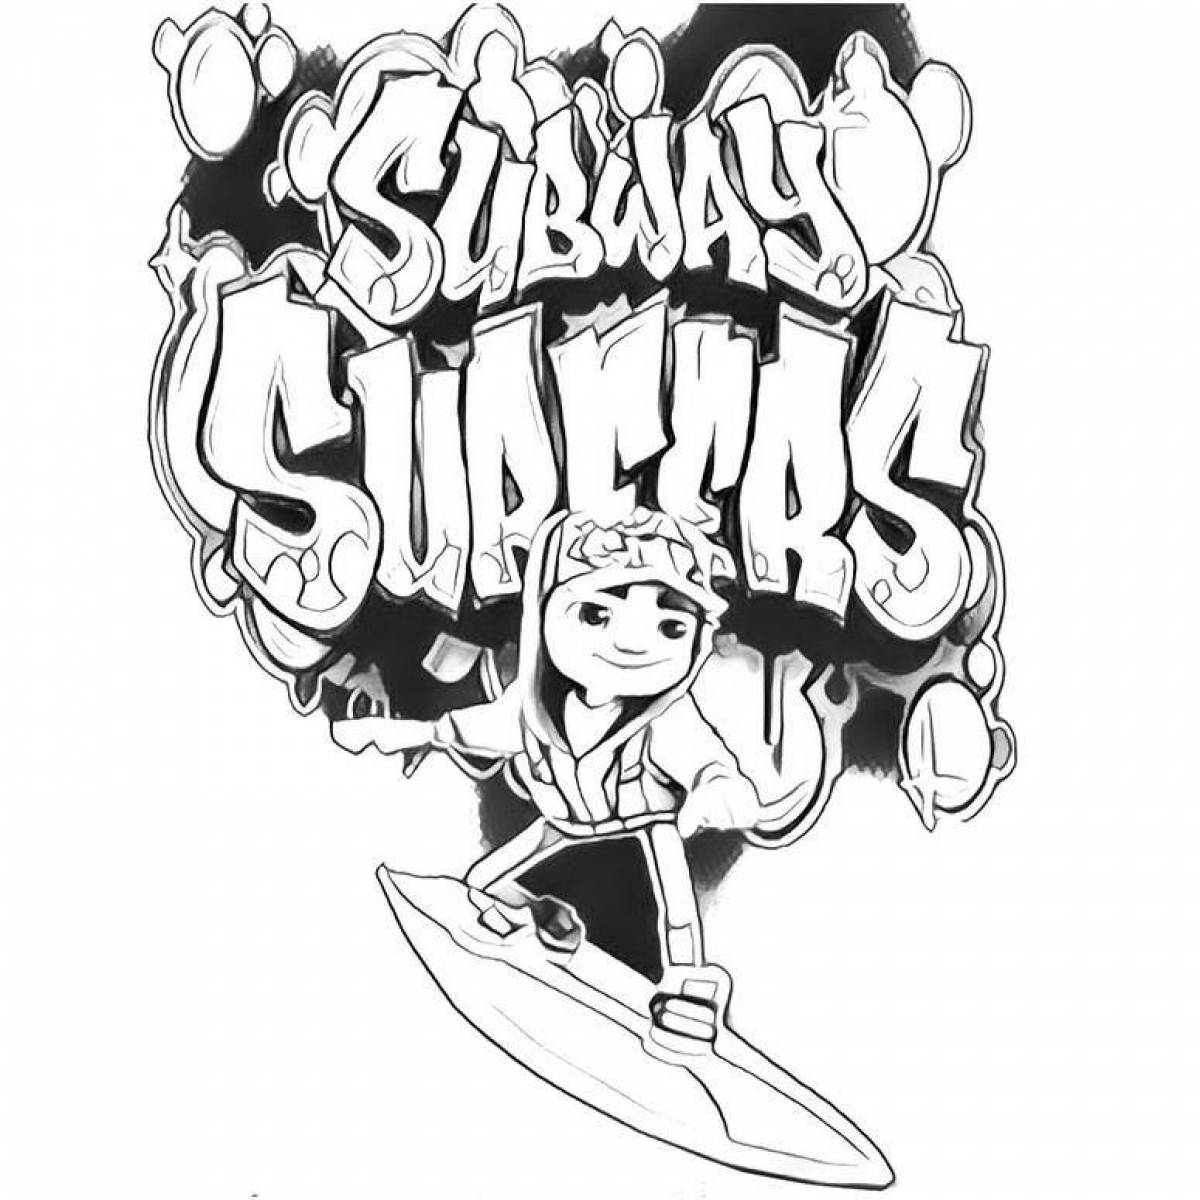 Subway surfers adventurous coloring book